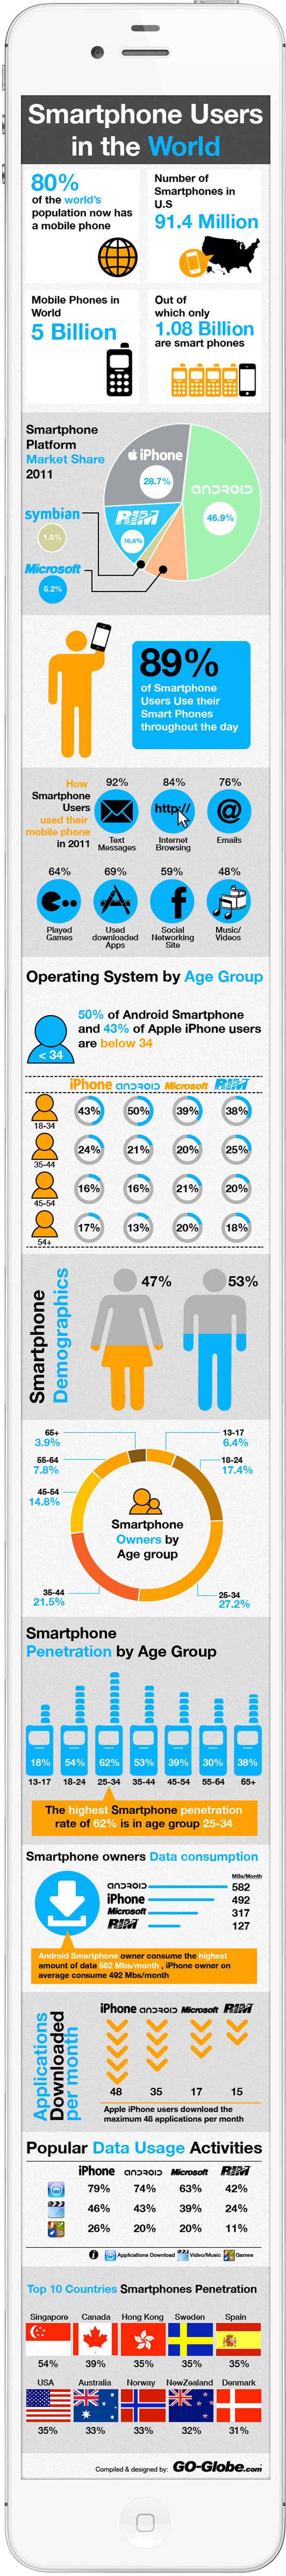 smartphone-usage-statistics-2012-infographic.jpg